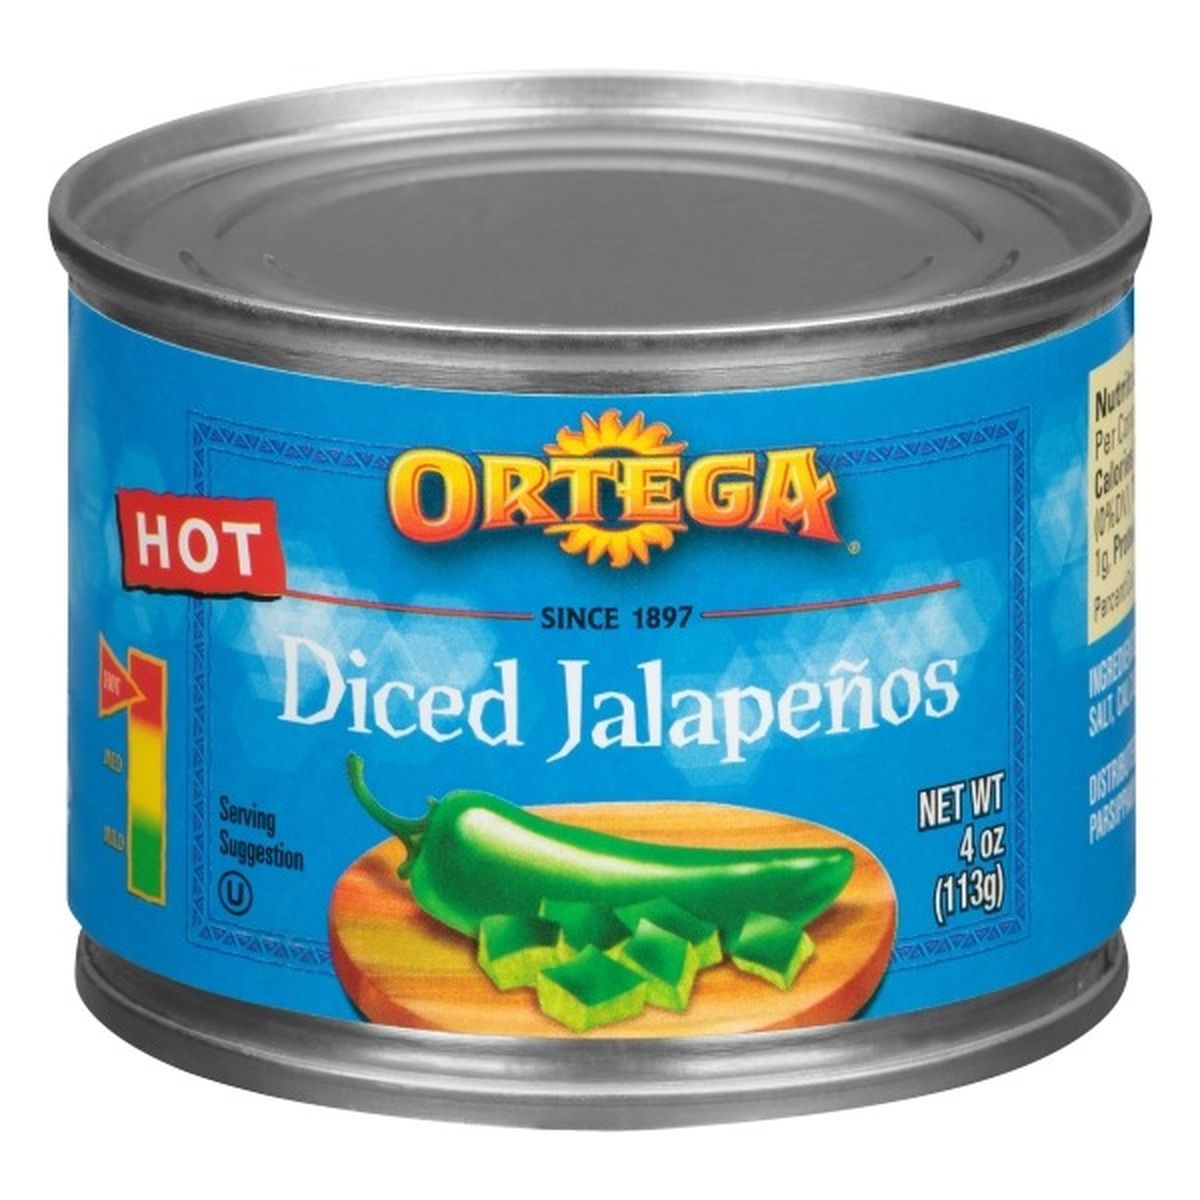 Calories in Ortega Diced Jalapenos, Hot